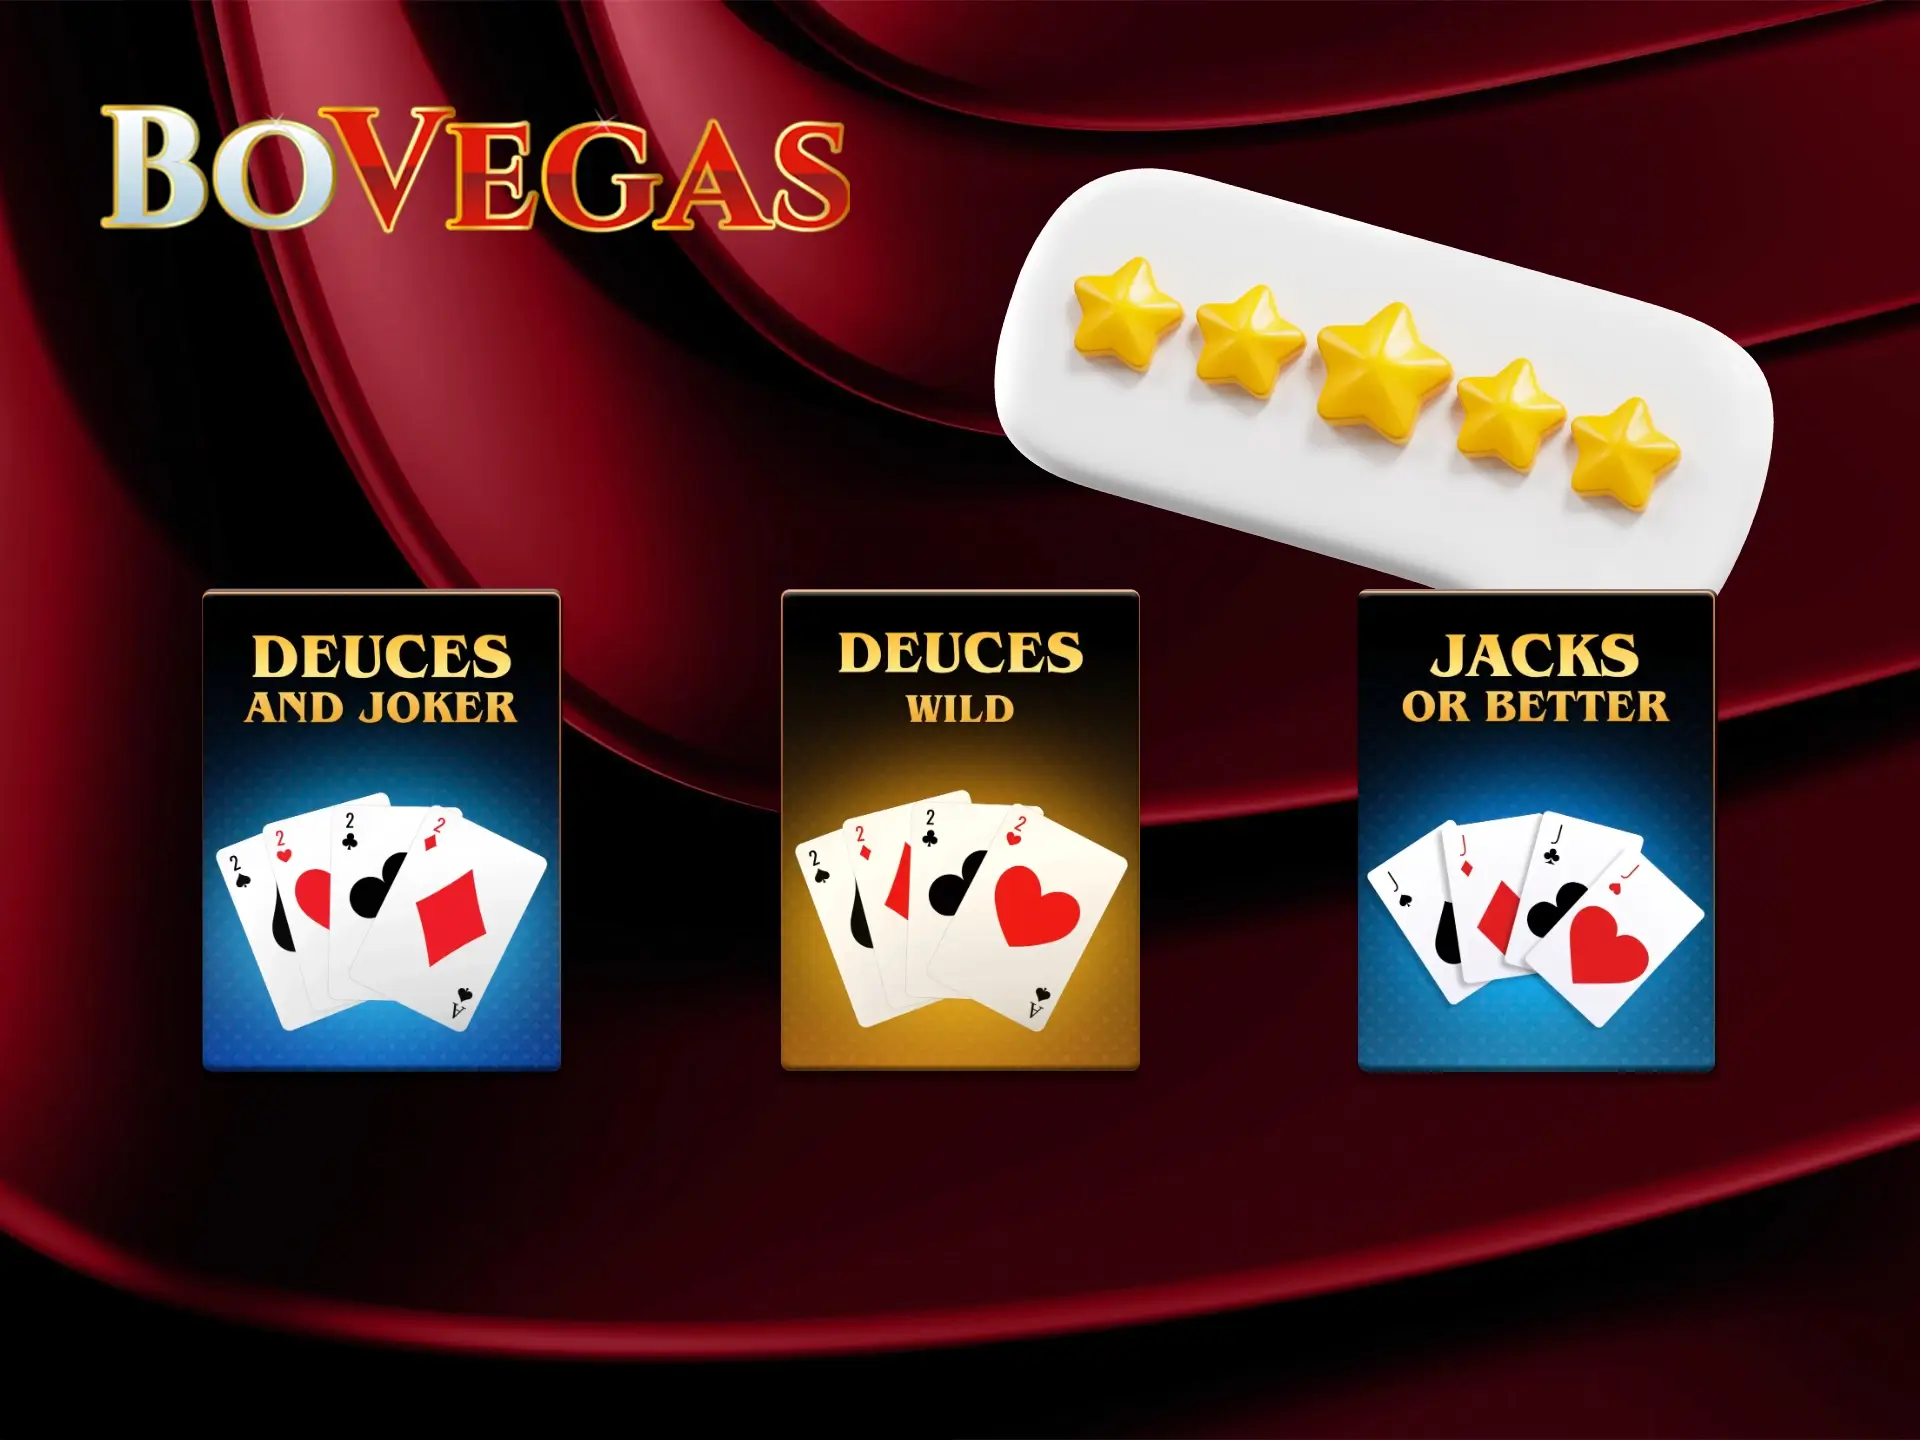 Opt for the best poker game on offer at BoVegas Casino.